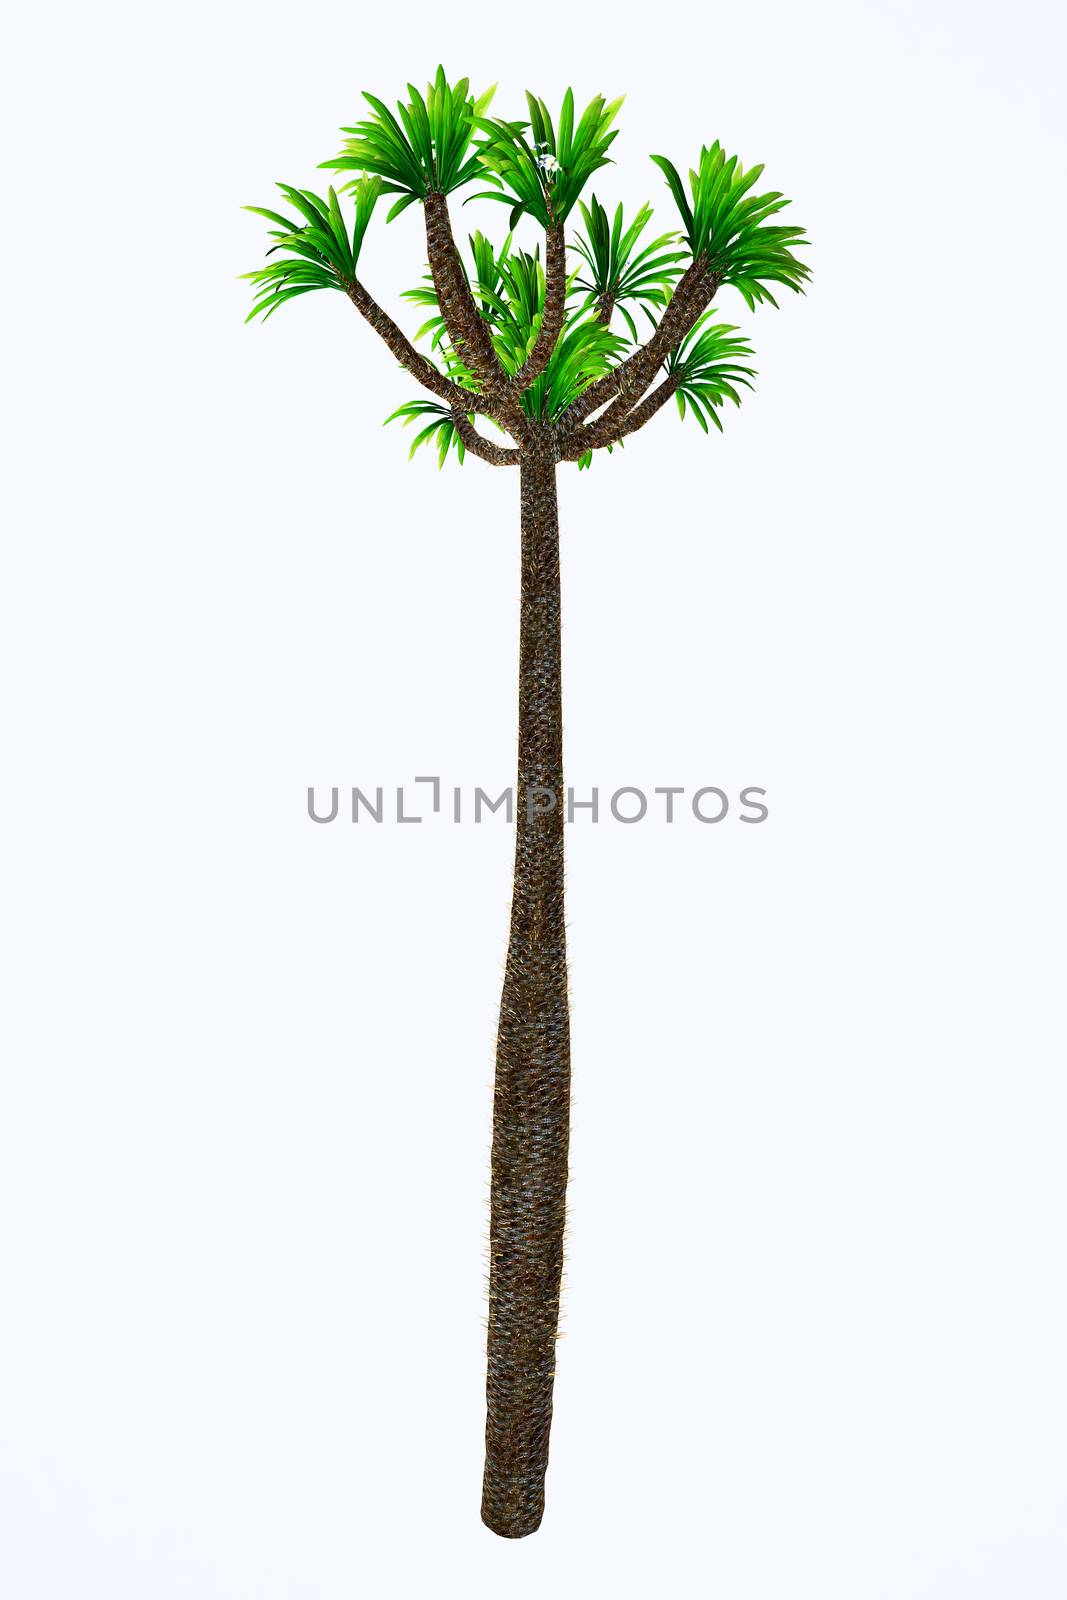 Pachypodium lamerei Tall Tree by Catmando